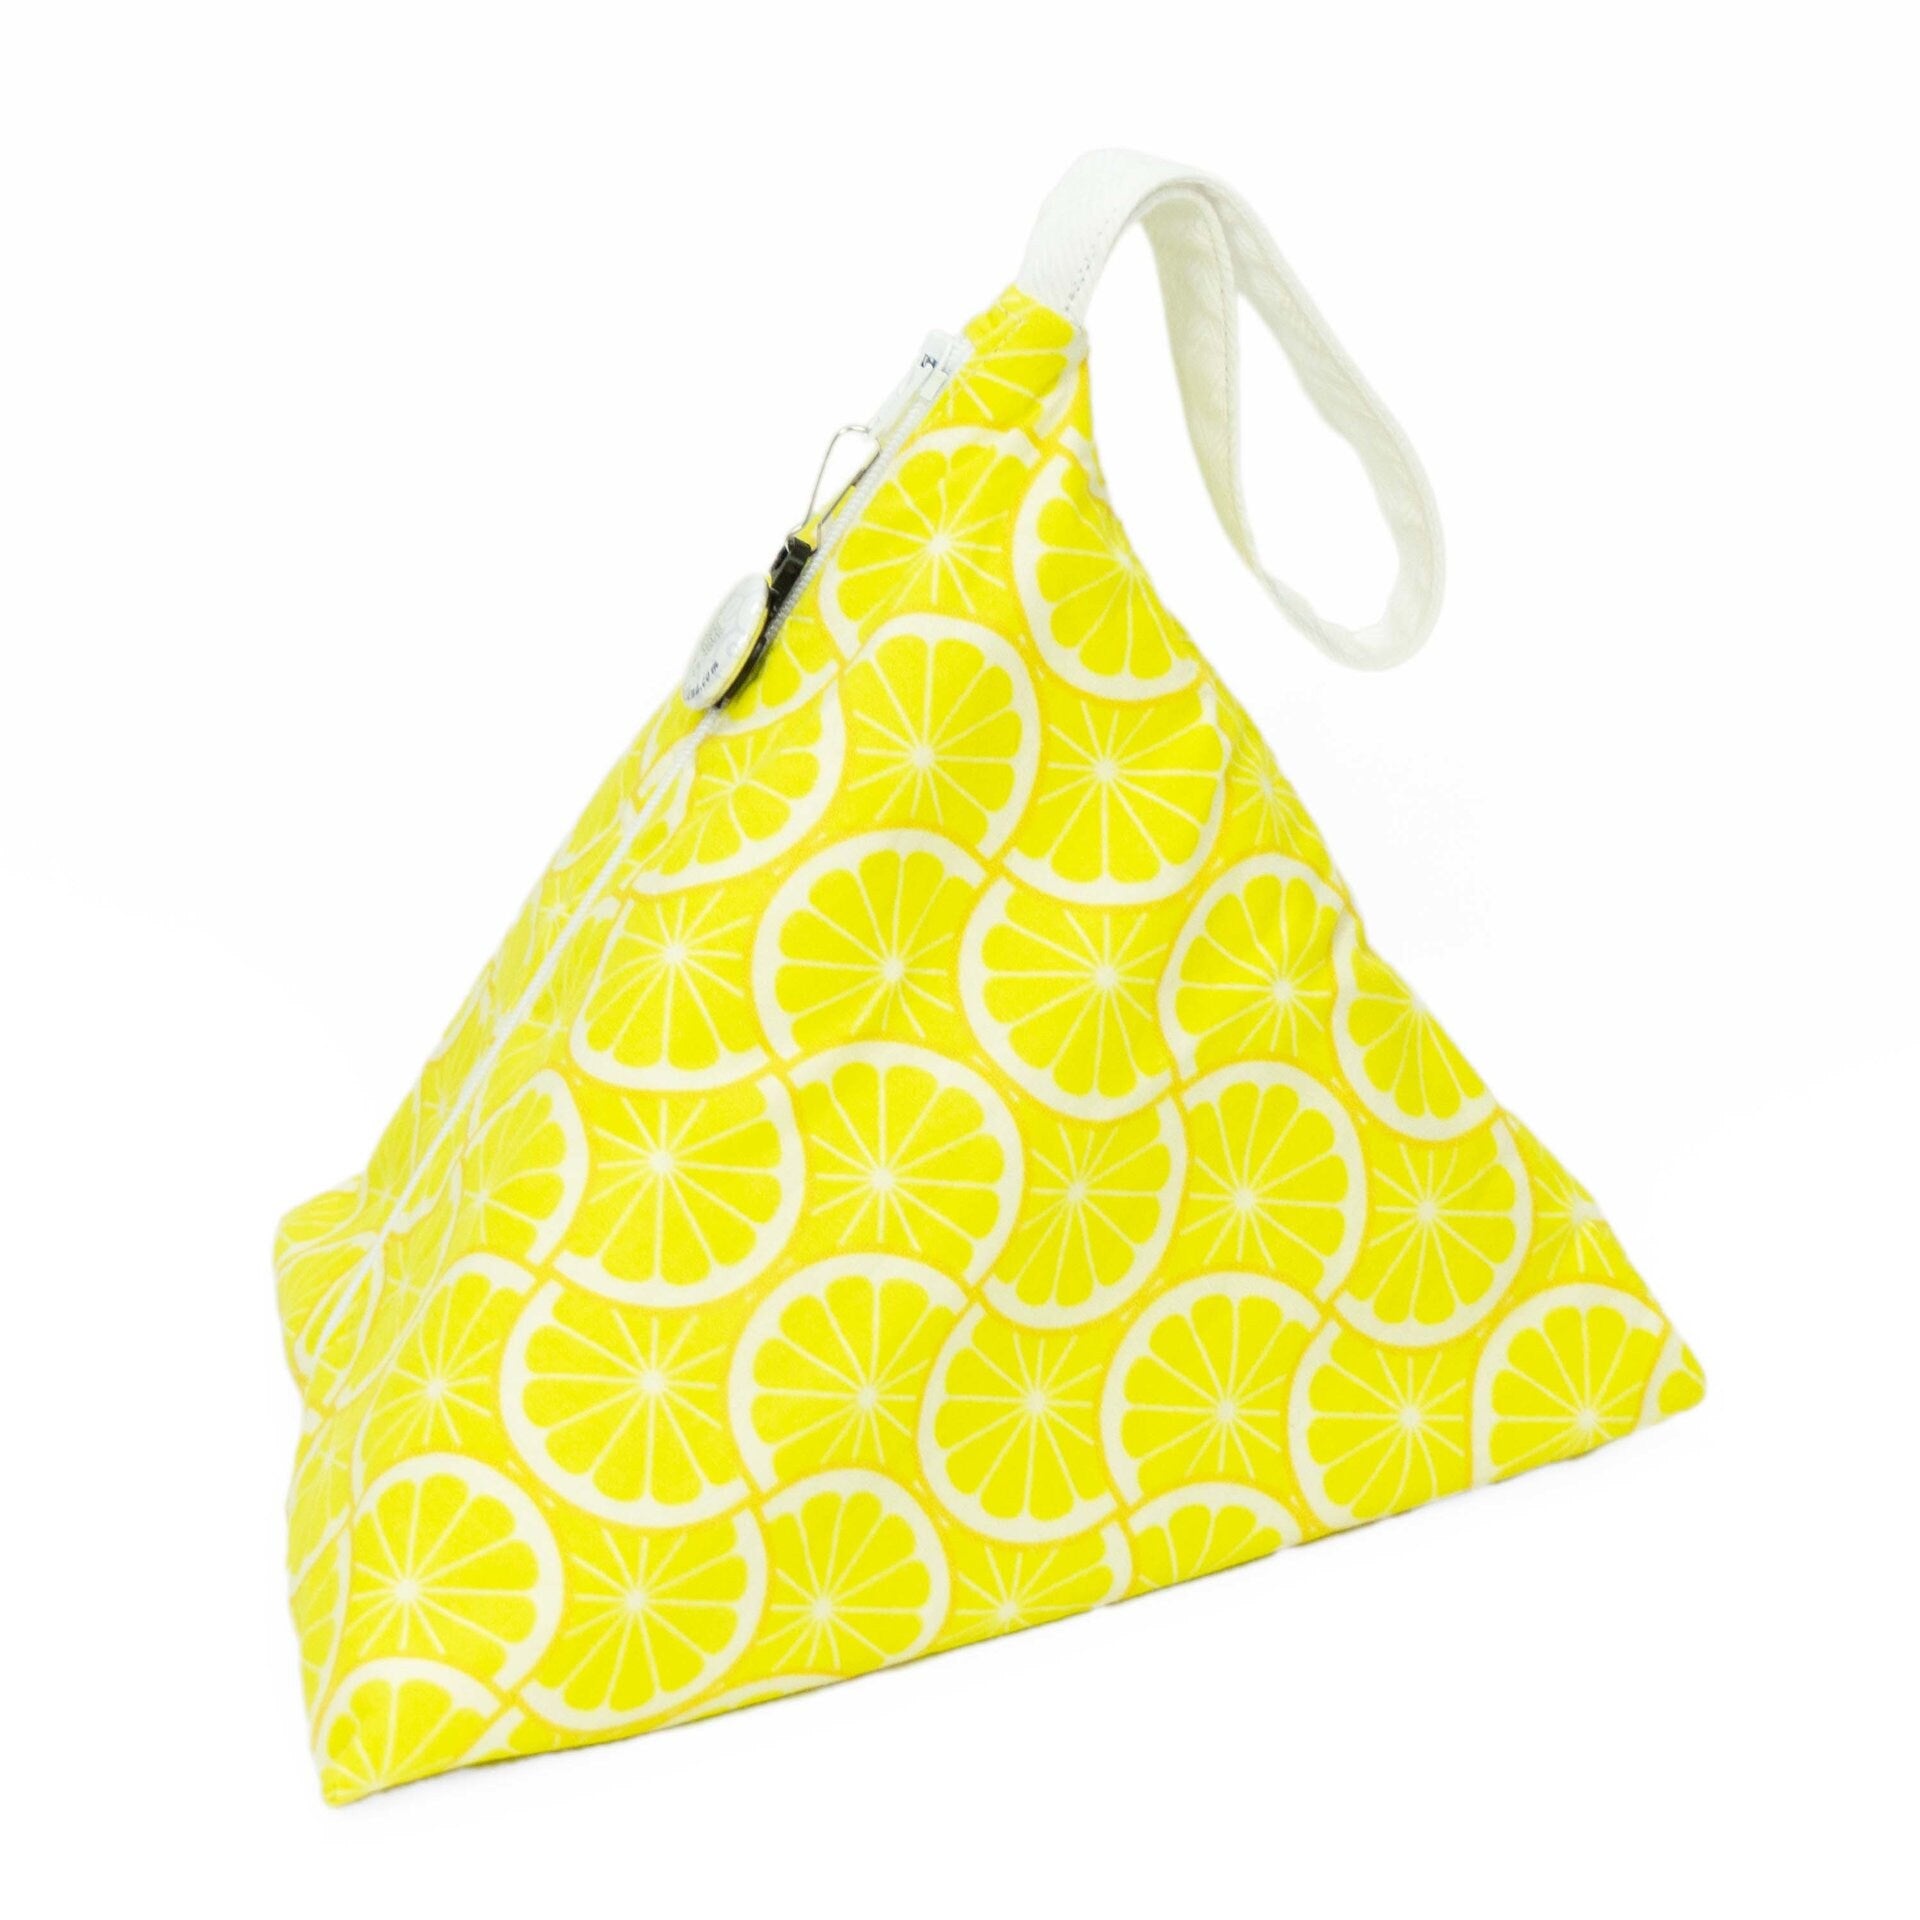 Lemonade - Llexical Divided Sock Pouch - Knitting, Crochet, Spinning Project Bag